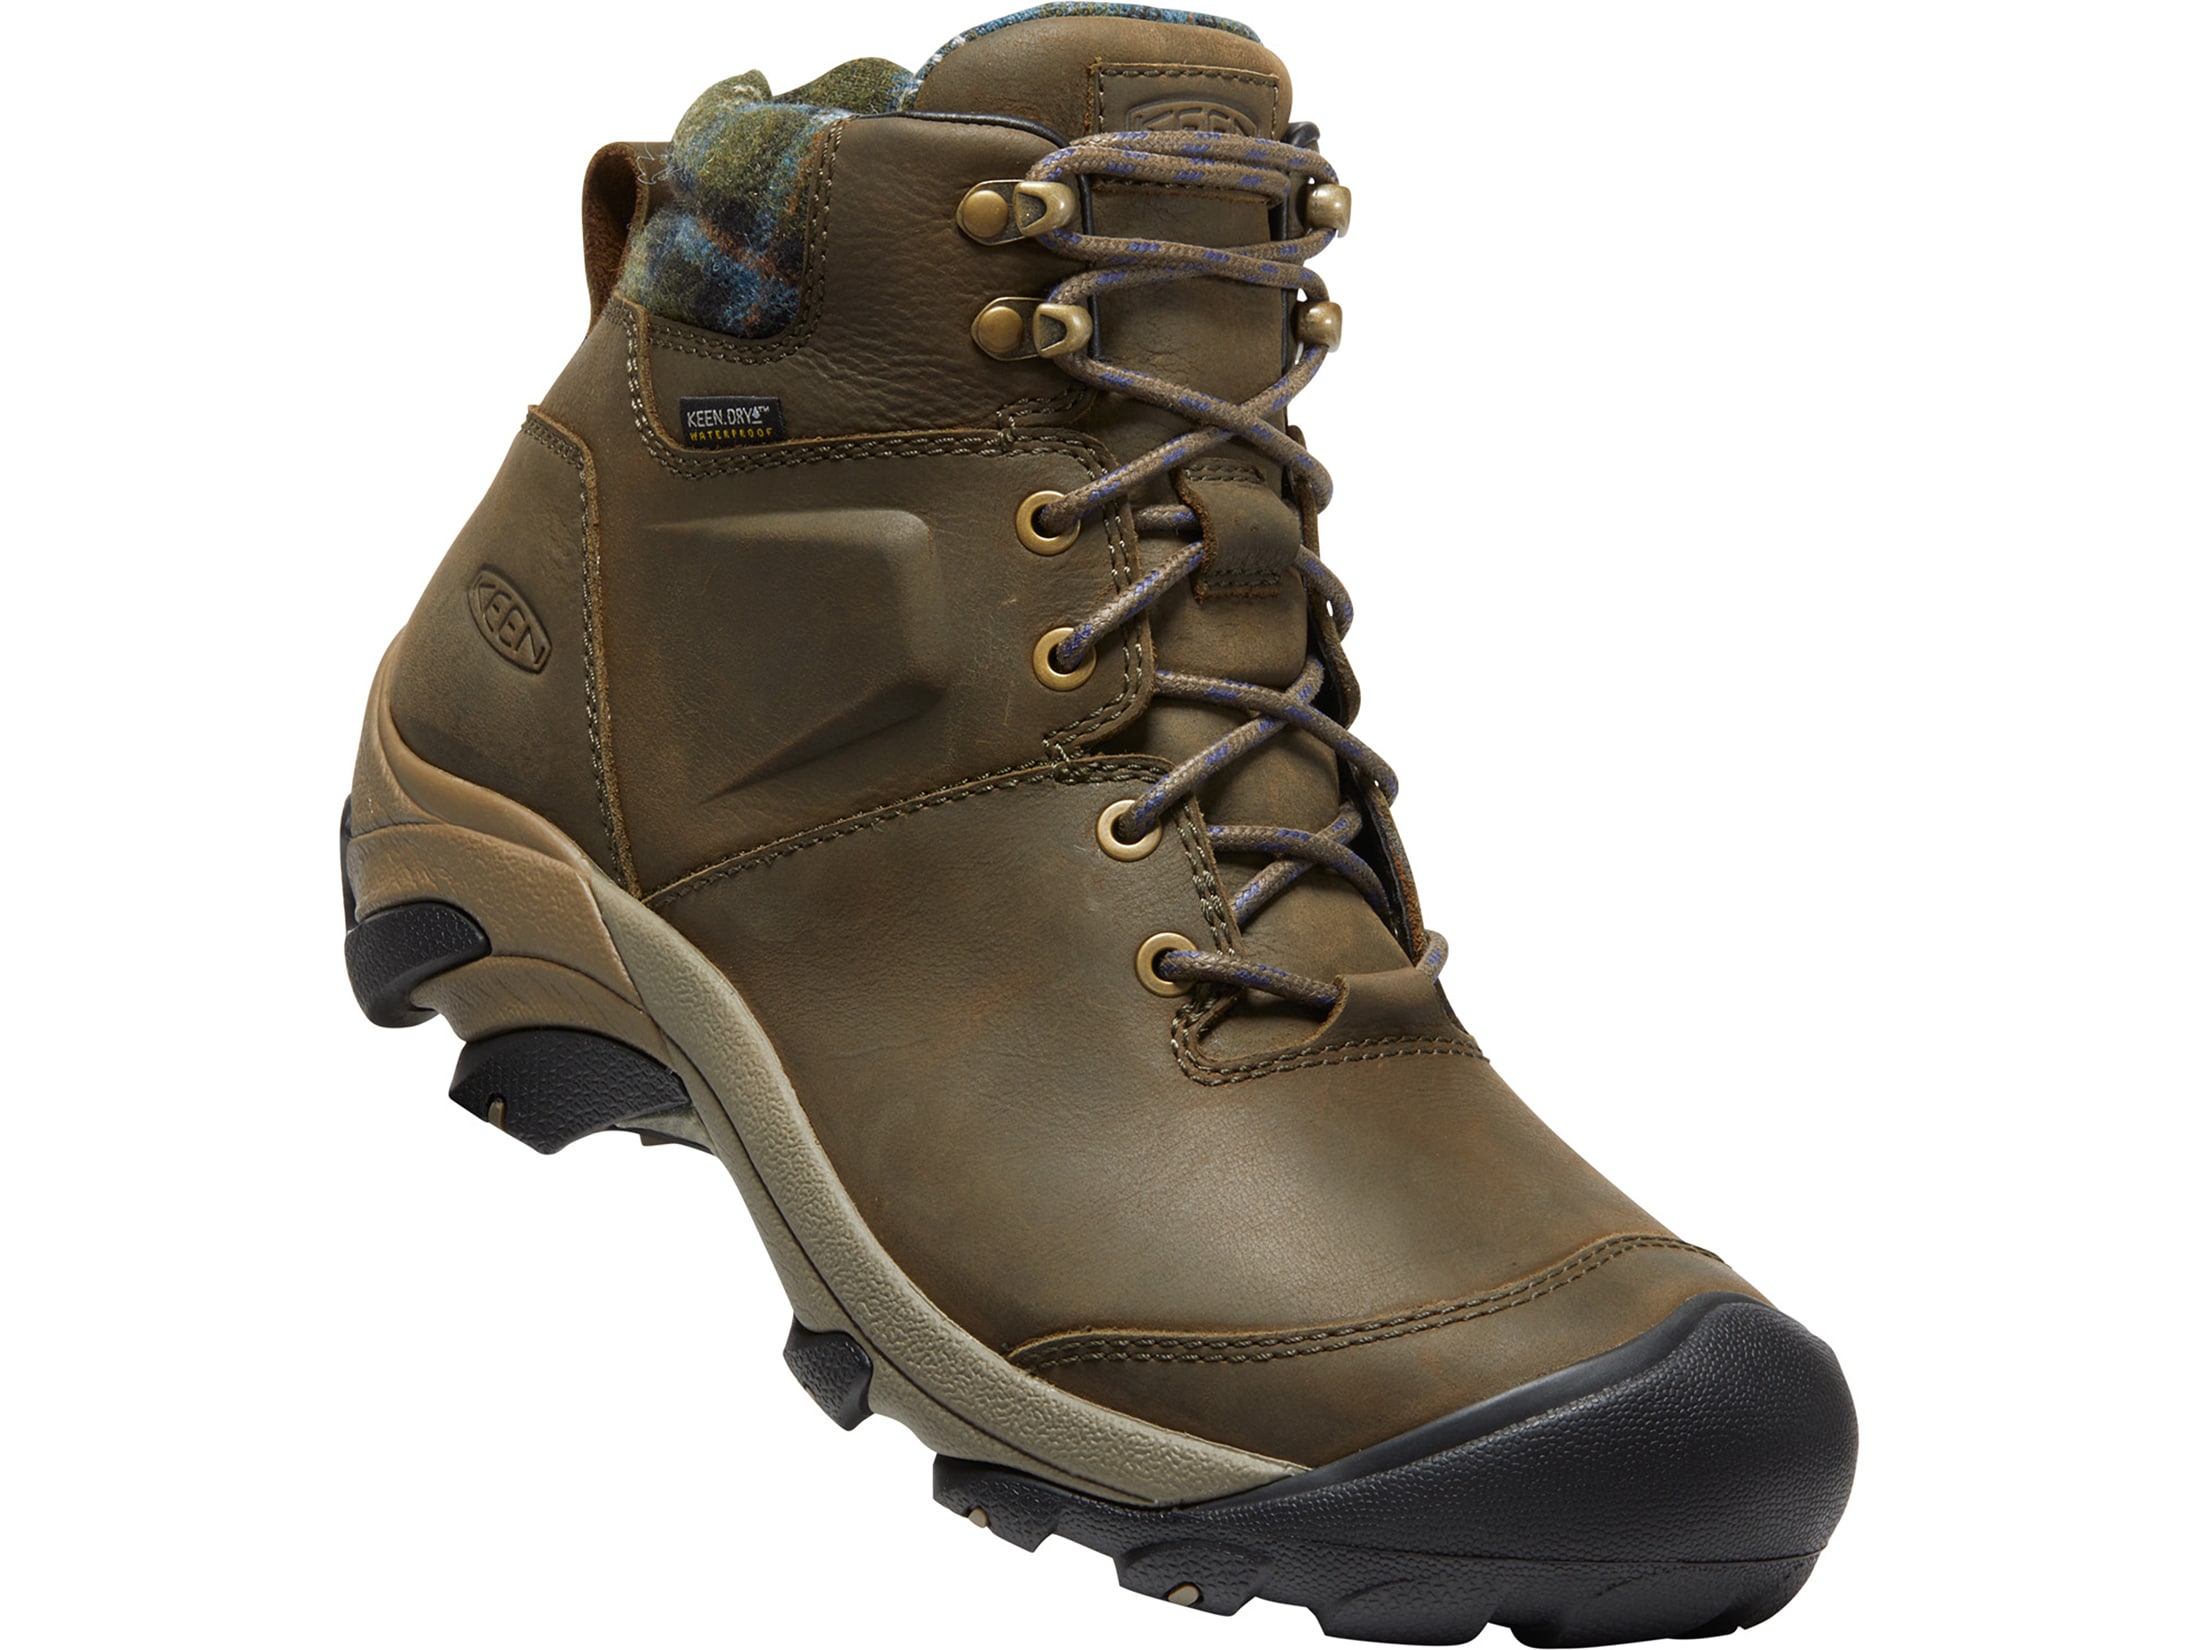 Keen Targhee II Winter WP 200 Gram Insulated Hiking Boots